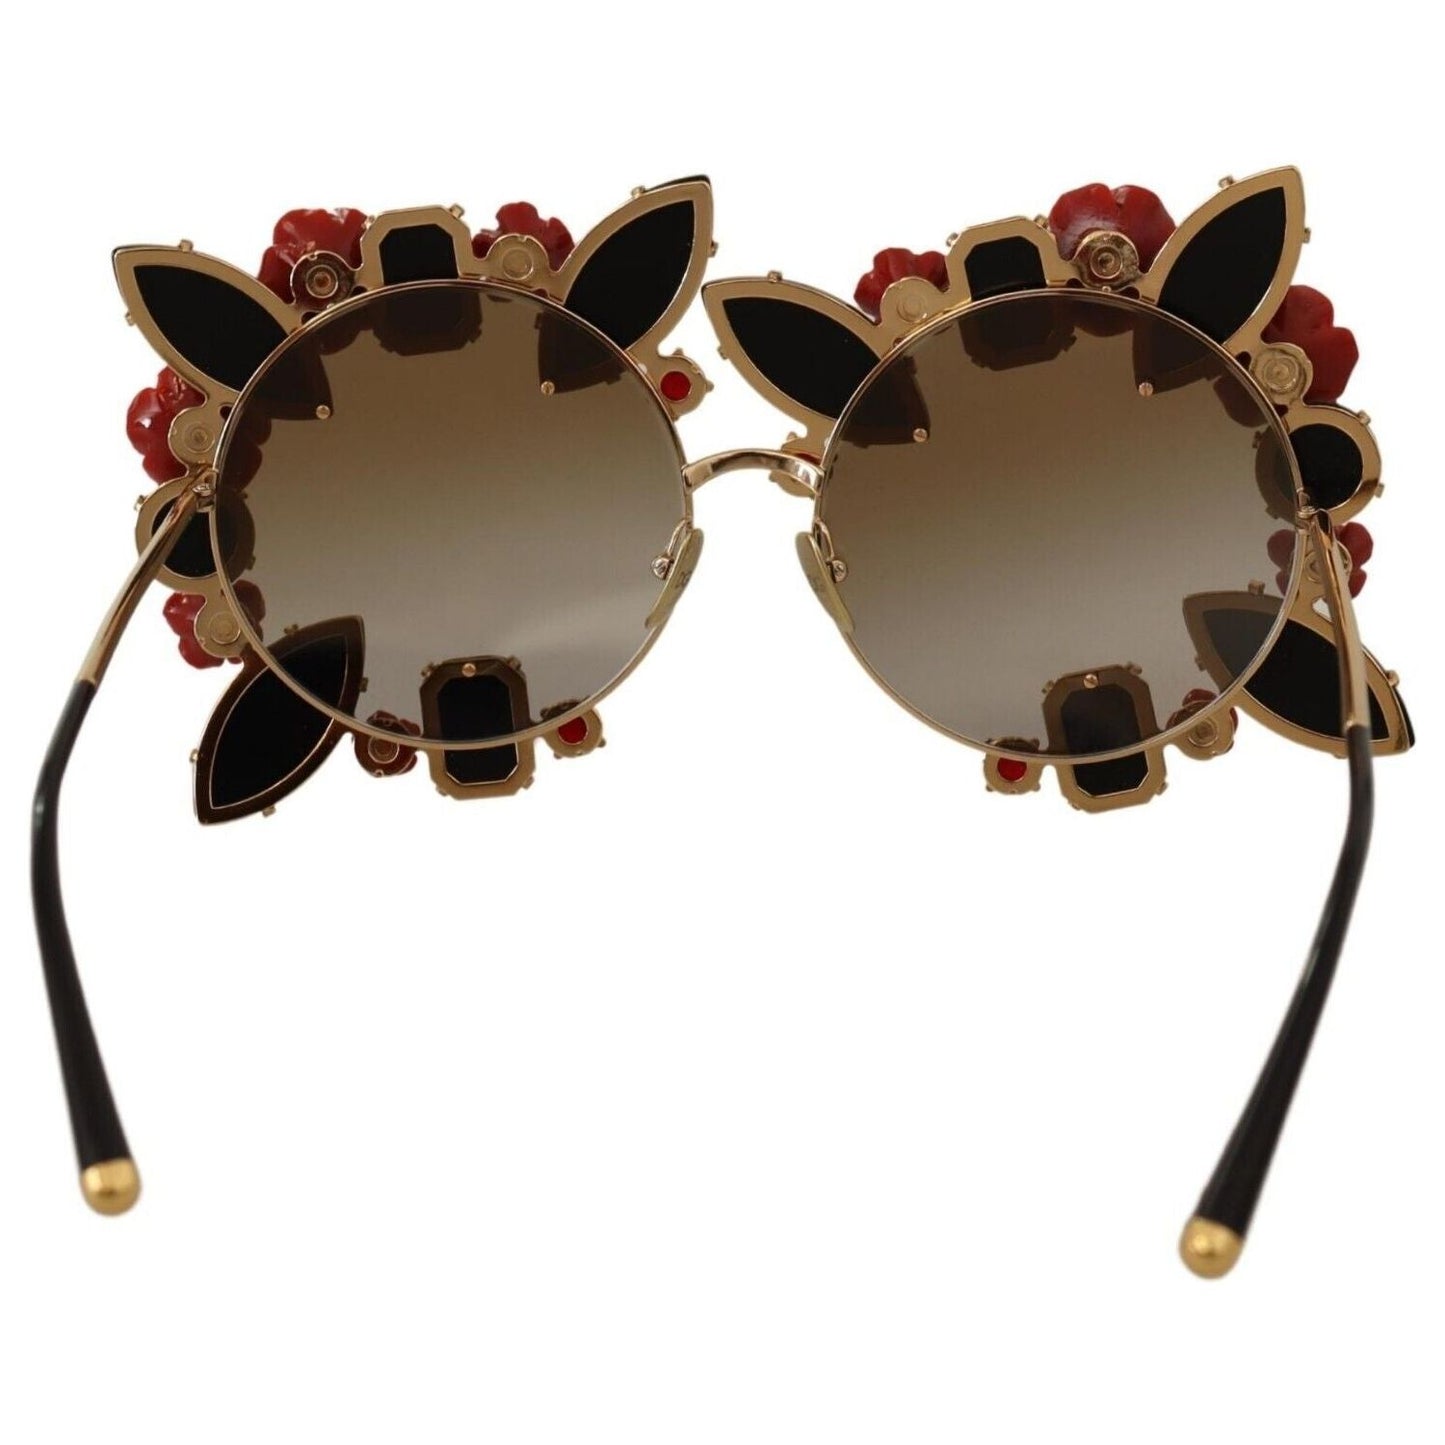 Dolce & Gabbana Elegant Round Metal Sunglasses with Rose Detail WOMAN SUNGLASSES gold-metal-frame-roses-embellished-sunglasses s-l1600-2-36-0448b0ec-d8a.jpg